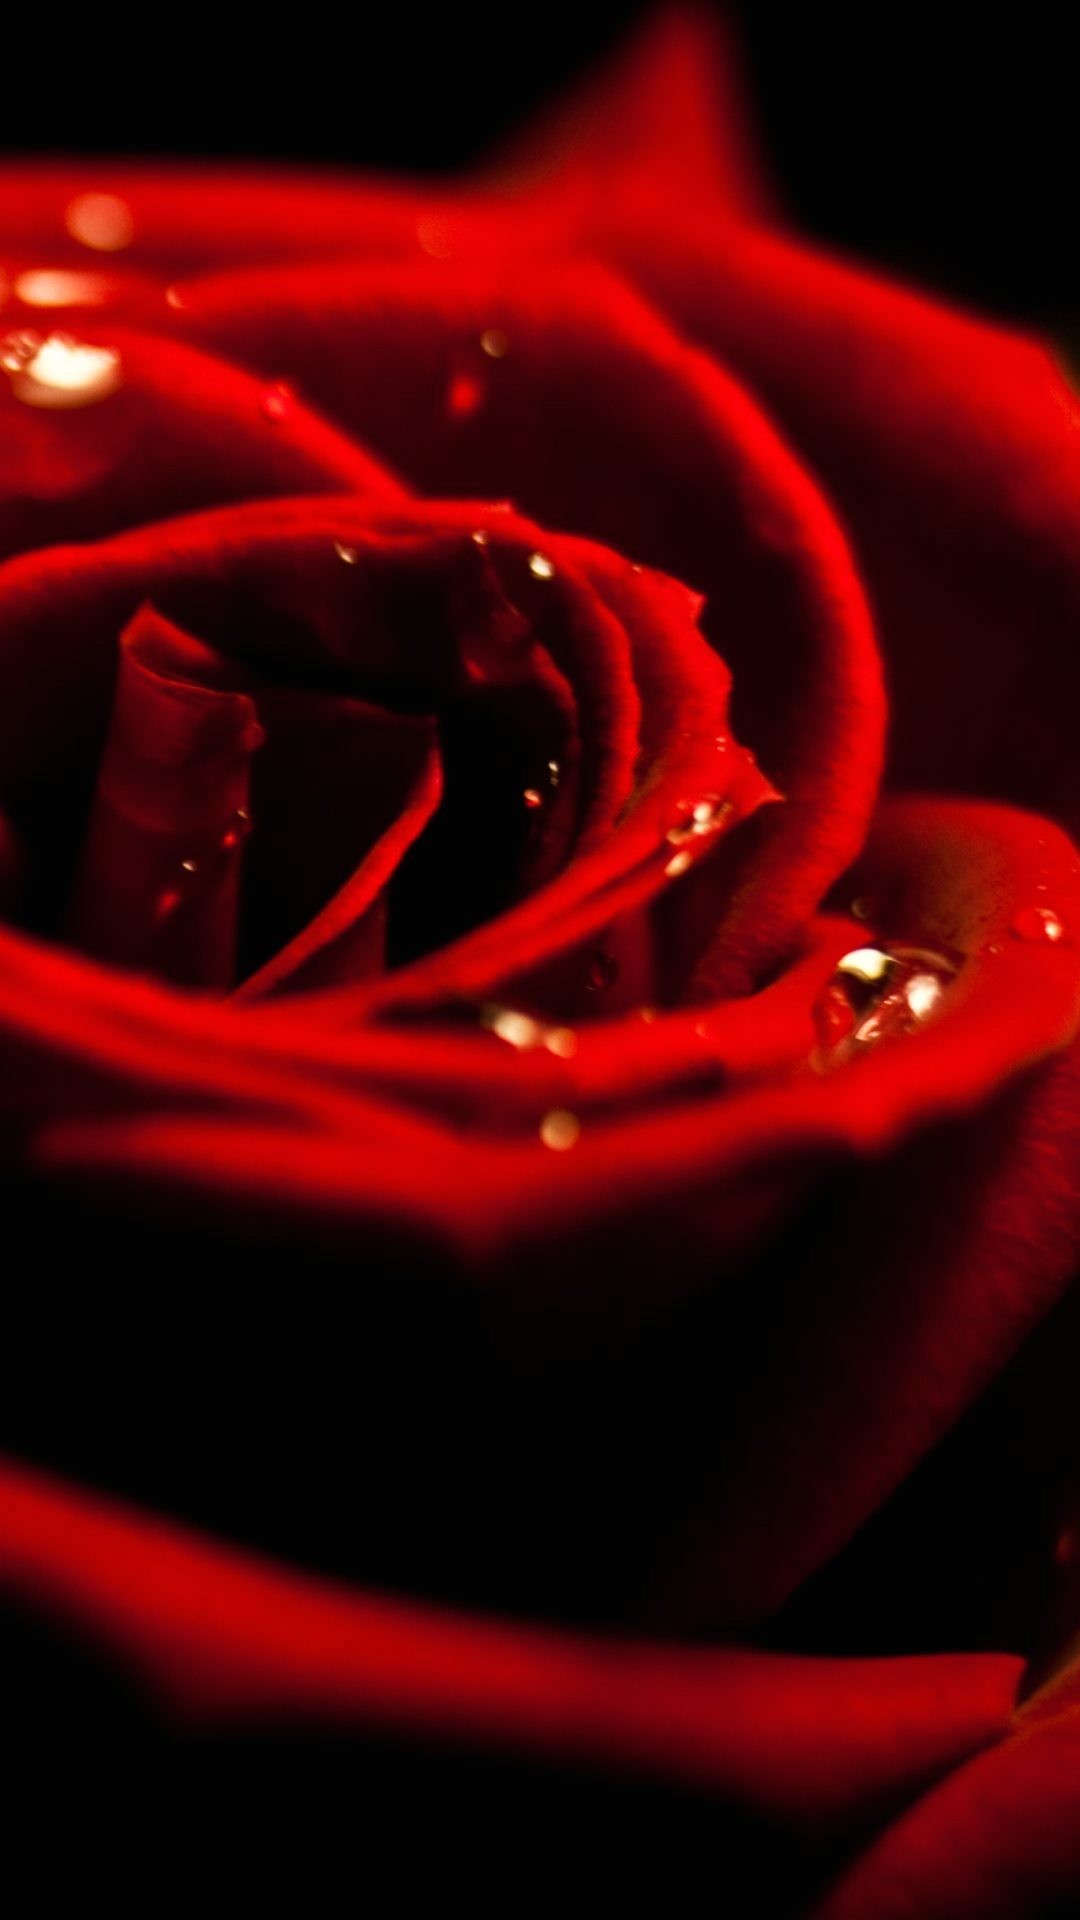 1080x1920 Z wallpaper full hd 1080 x 1920 smartphone amazing red rose